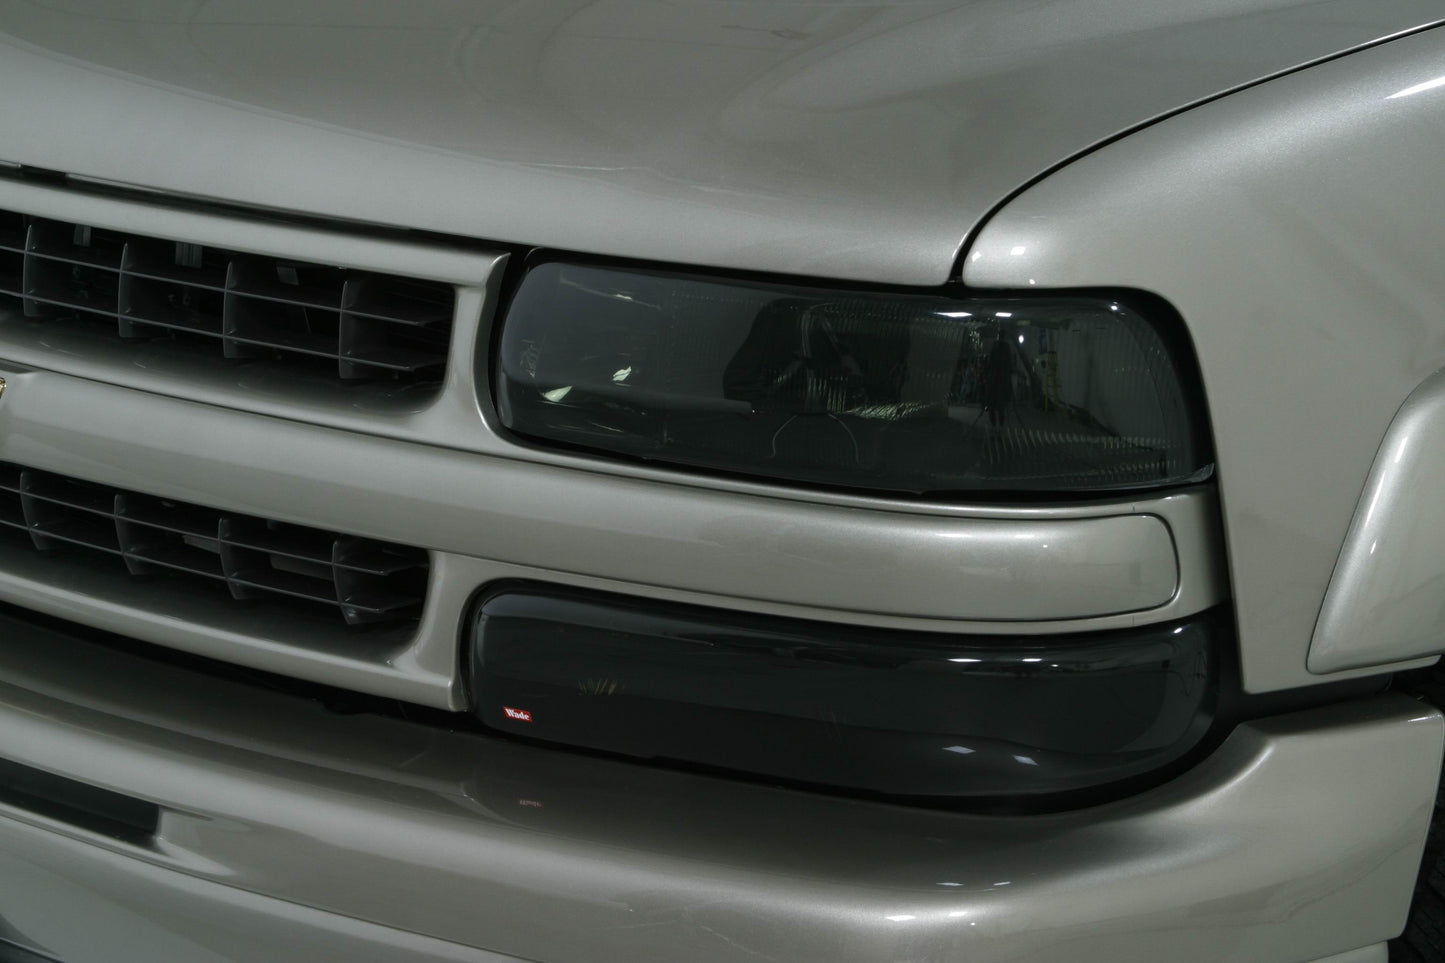 1992 Toyota Paseo Head Light Covers